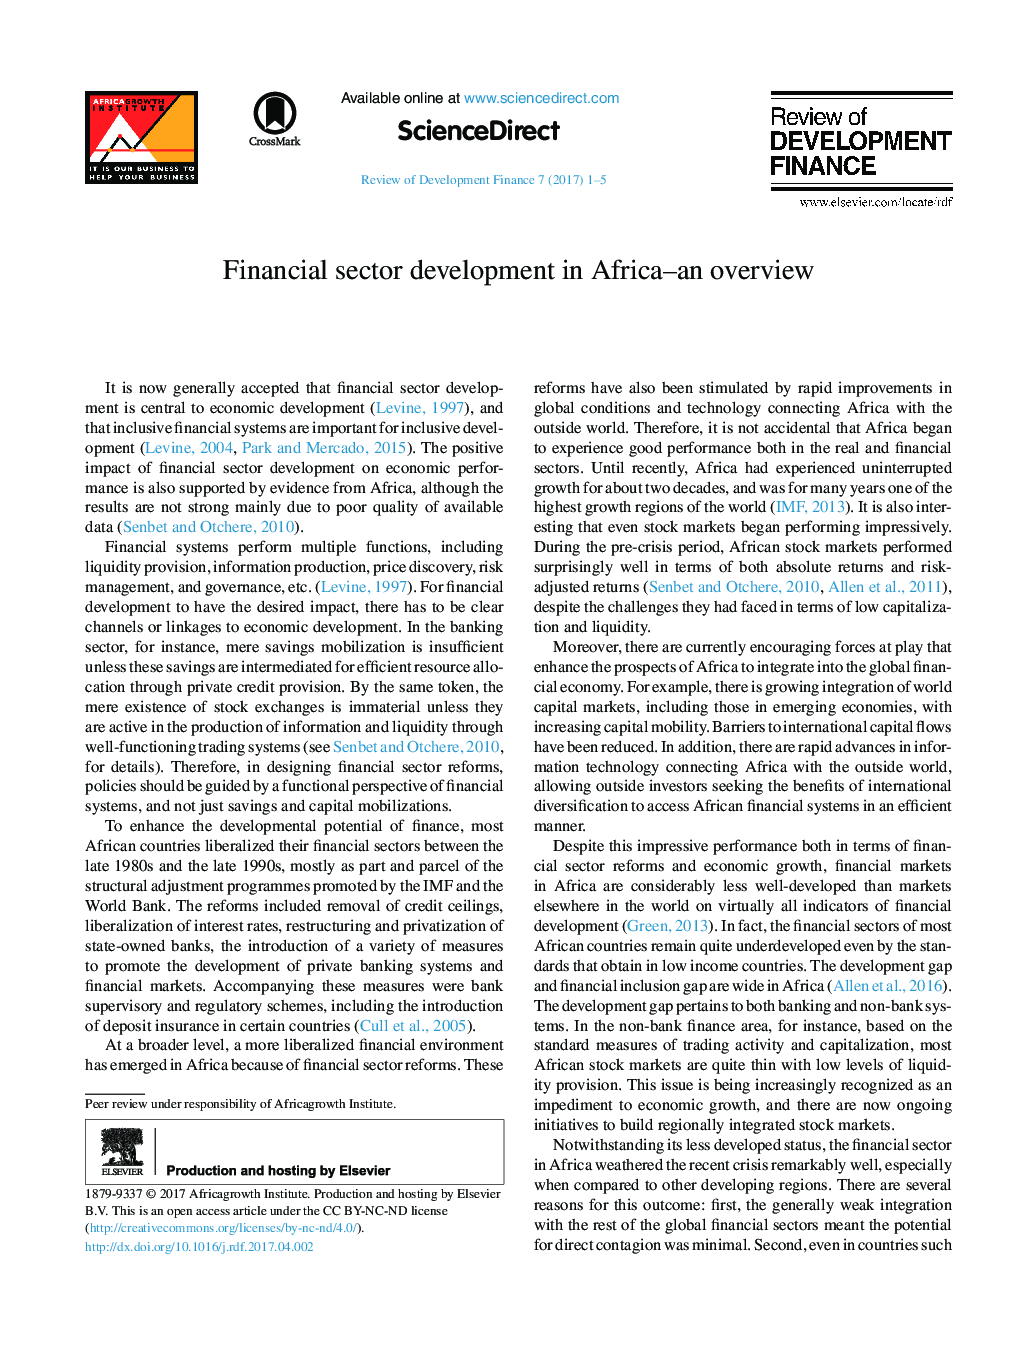 Financial sector development in Africa-an overview